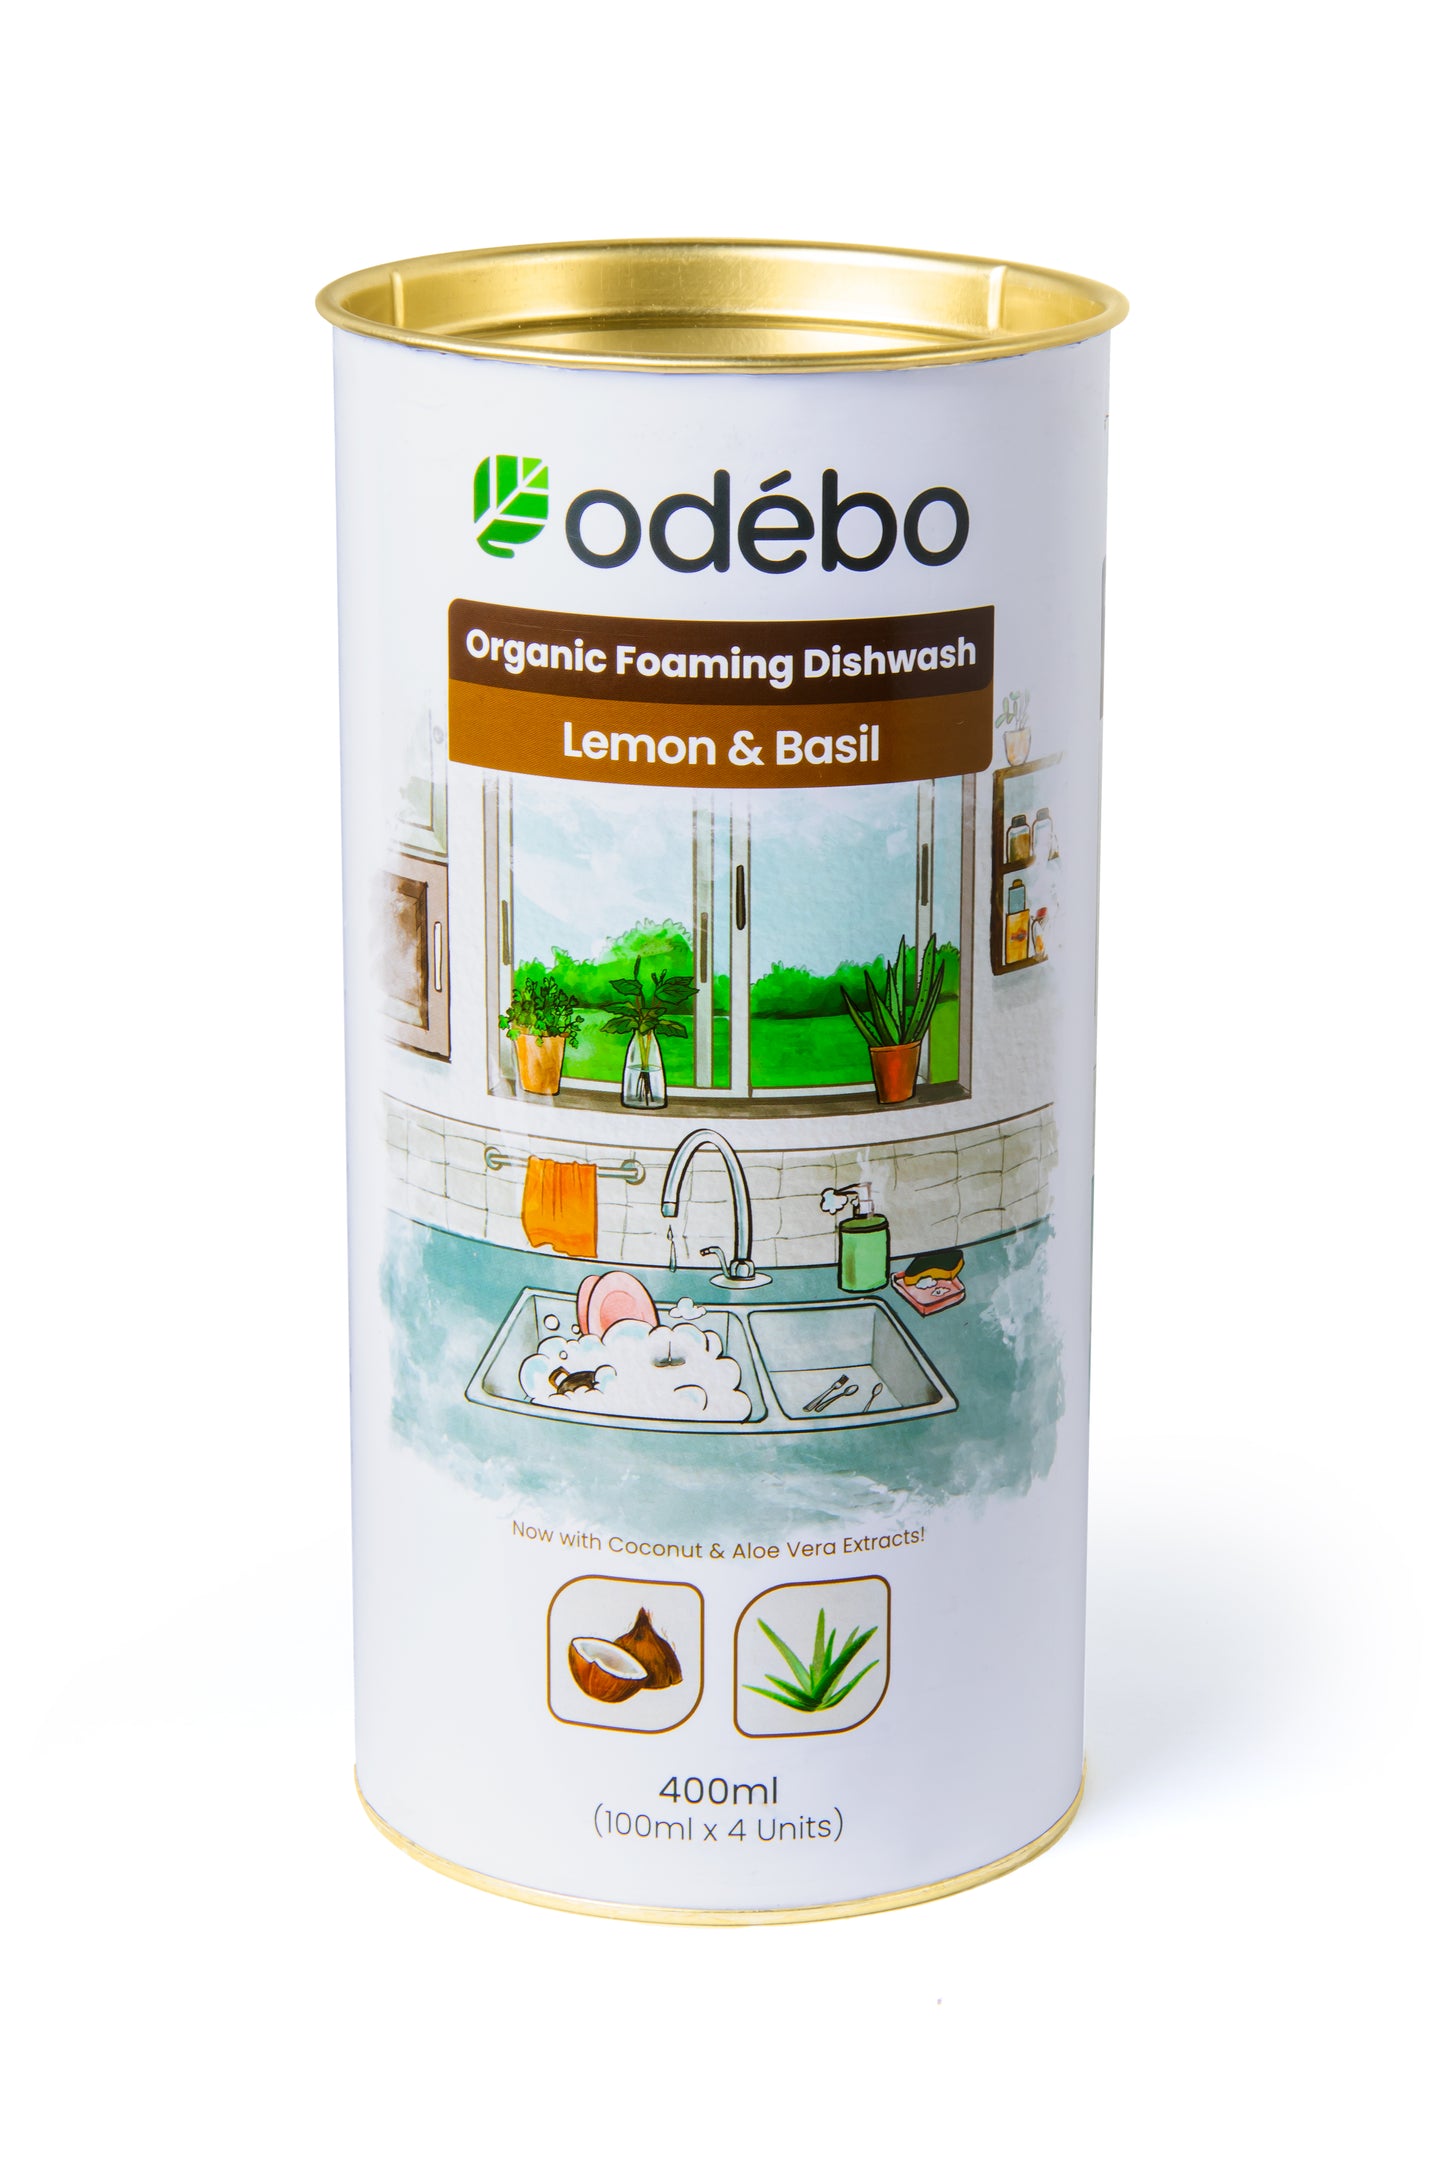 Odébo's Organic Foaming Dishwash